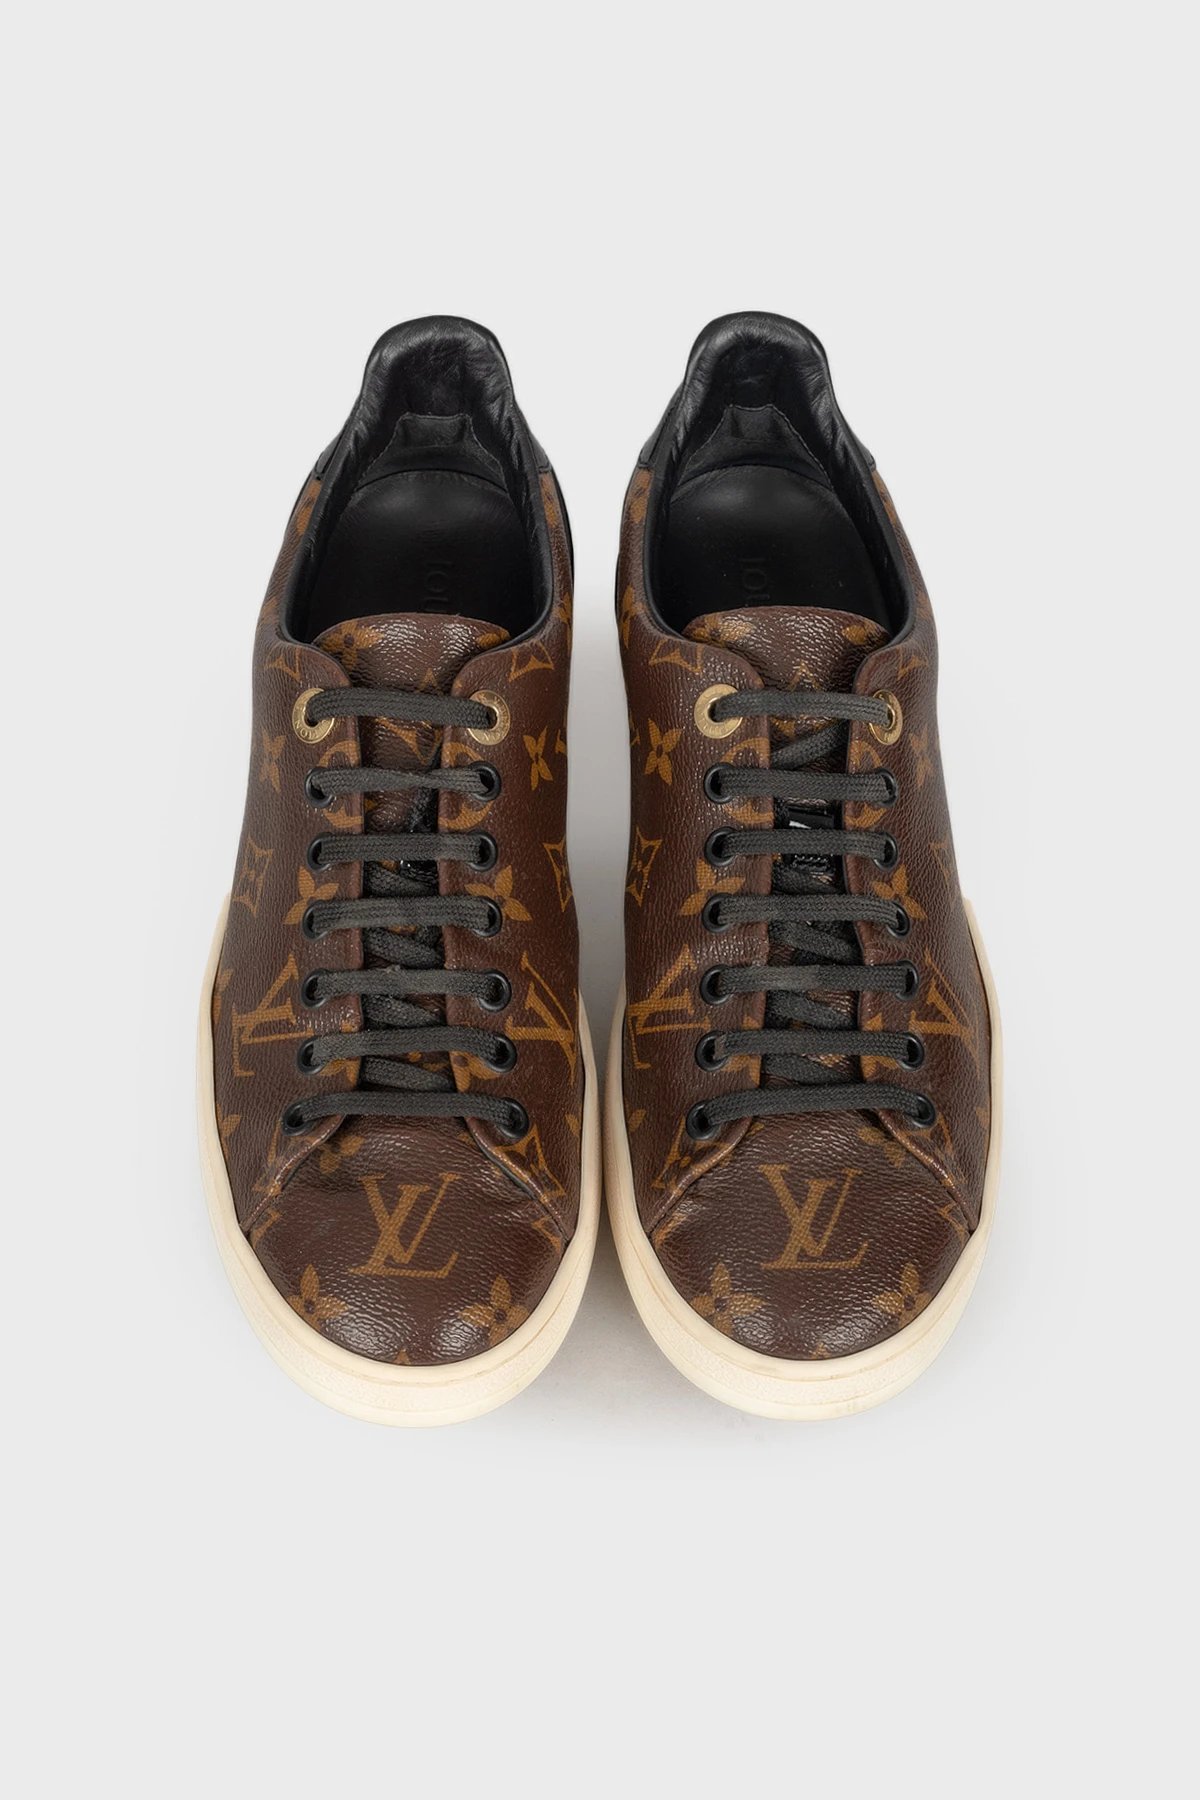 Louis Vuitton Frontrow sneakers - ReOriginal